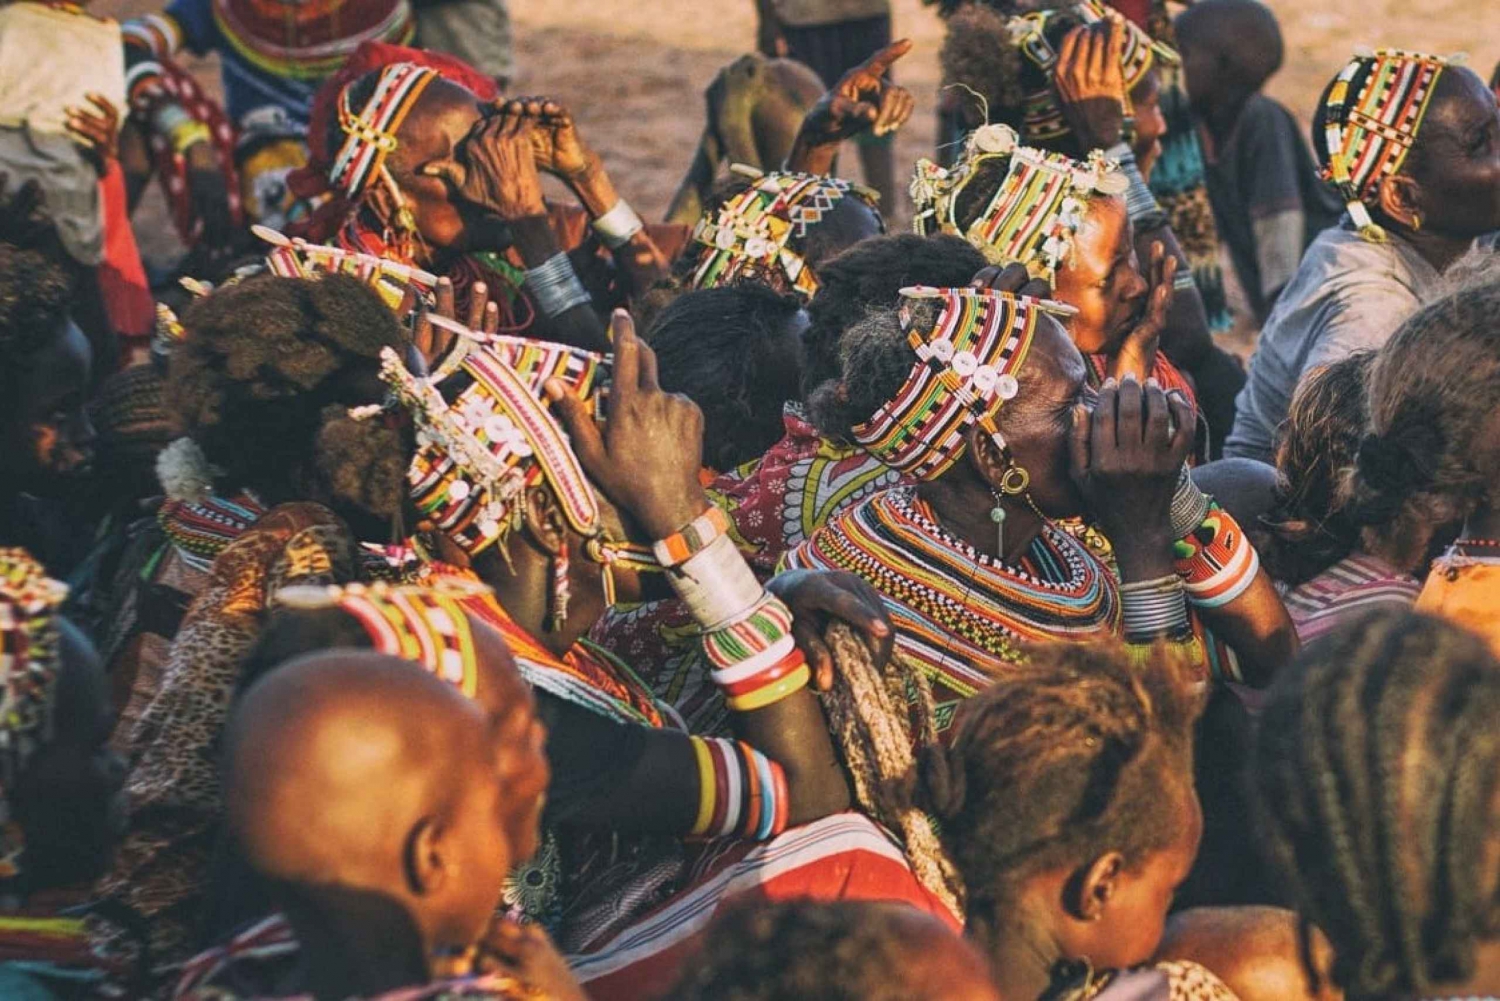 Kulturelle Tagestour zum Maasai-Dorf